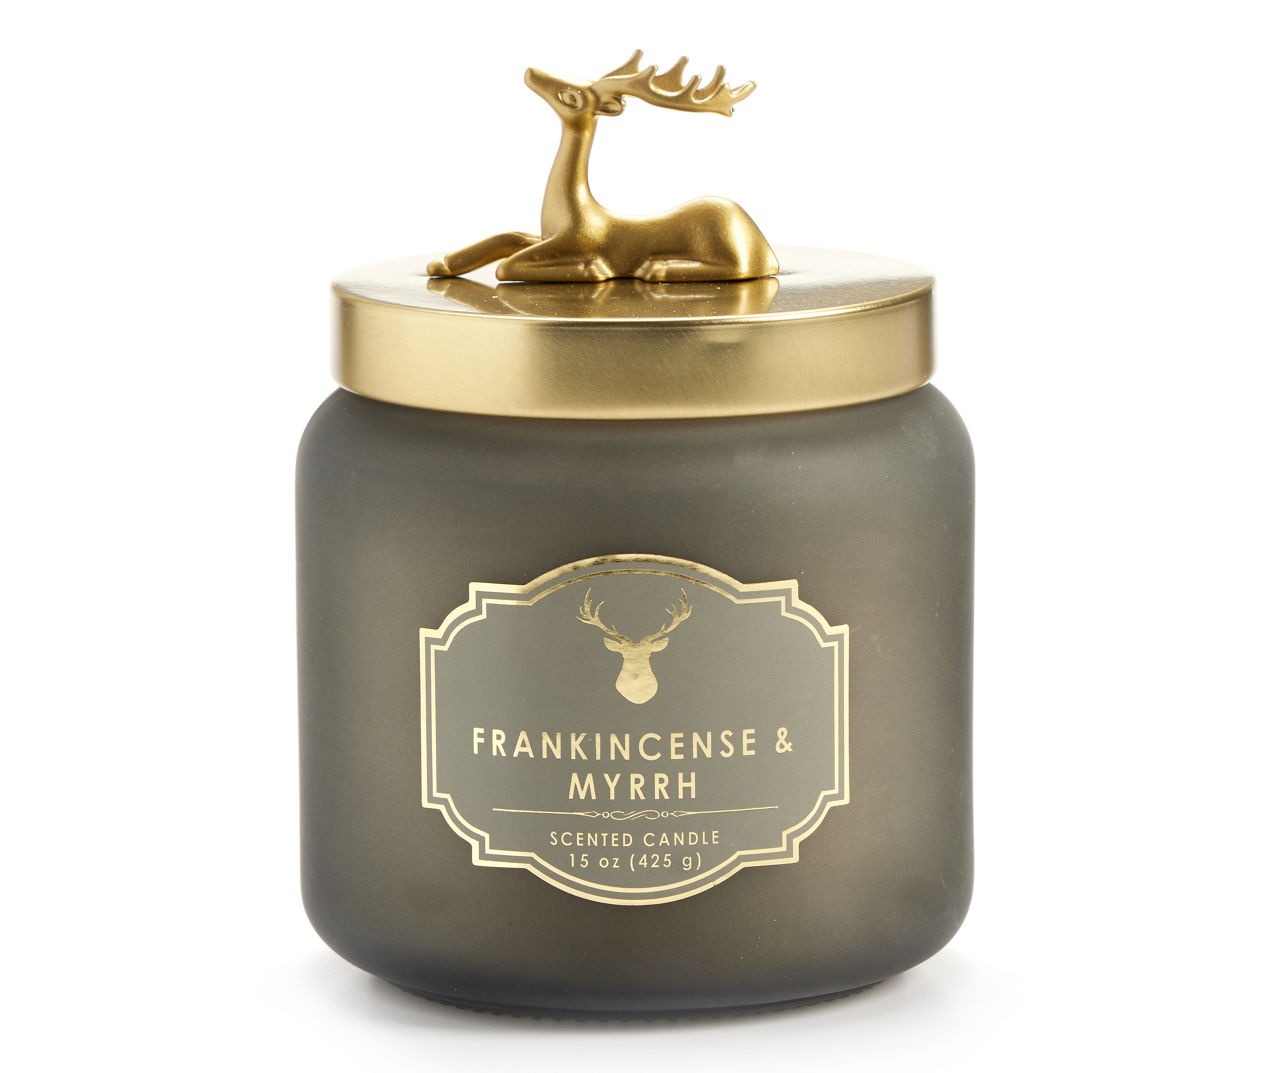 Frankincense & Myrrh Reindeer Lid Frosted Glass Candle, 15 Oz